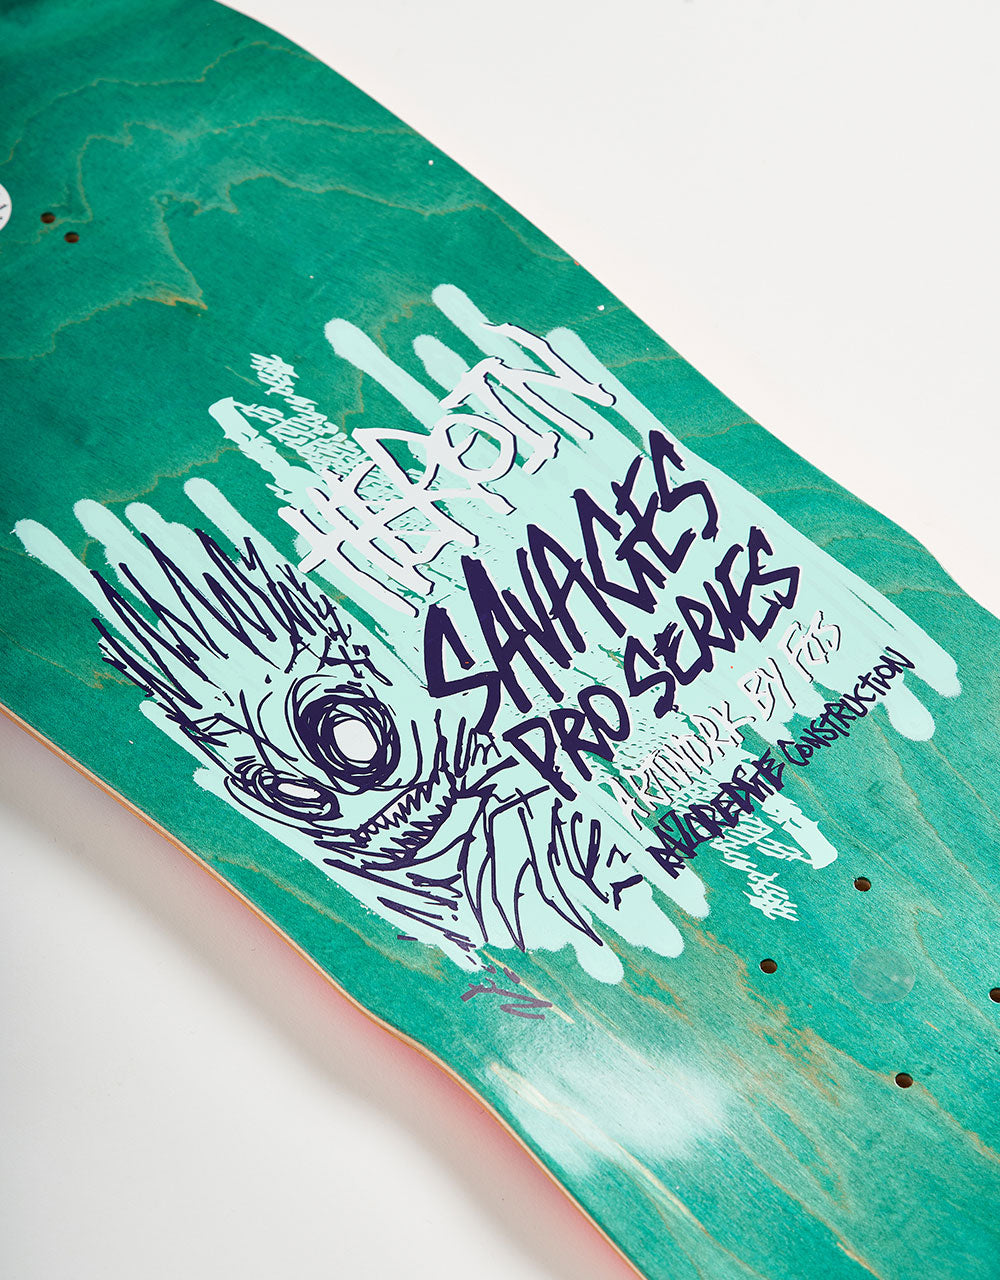 Heroin Dead Dave Savages Skateboard Deck - 10.1”